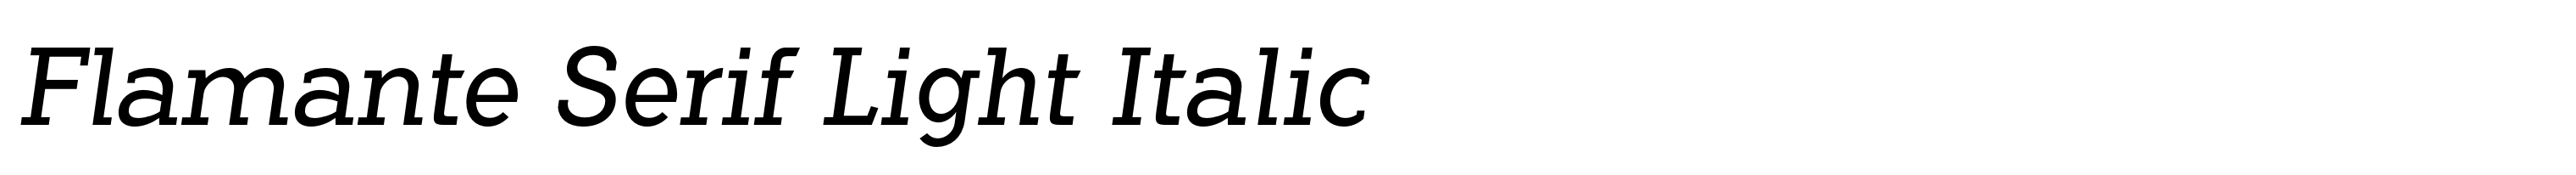 Flamante Serif Light Italic